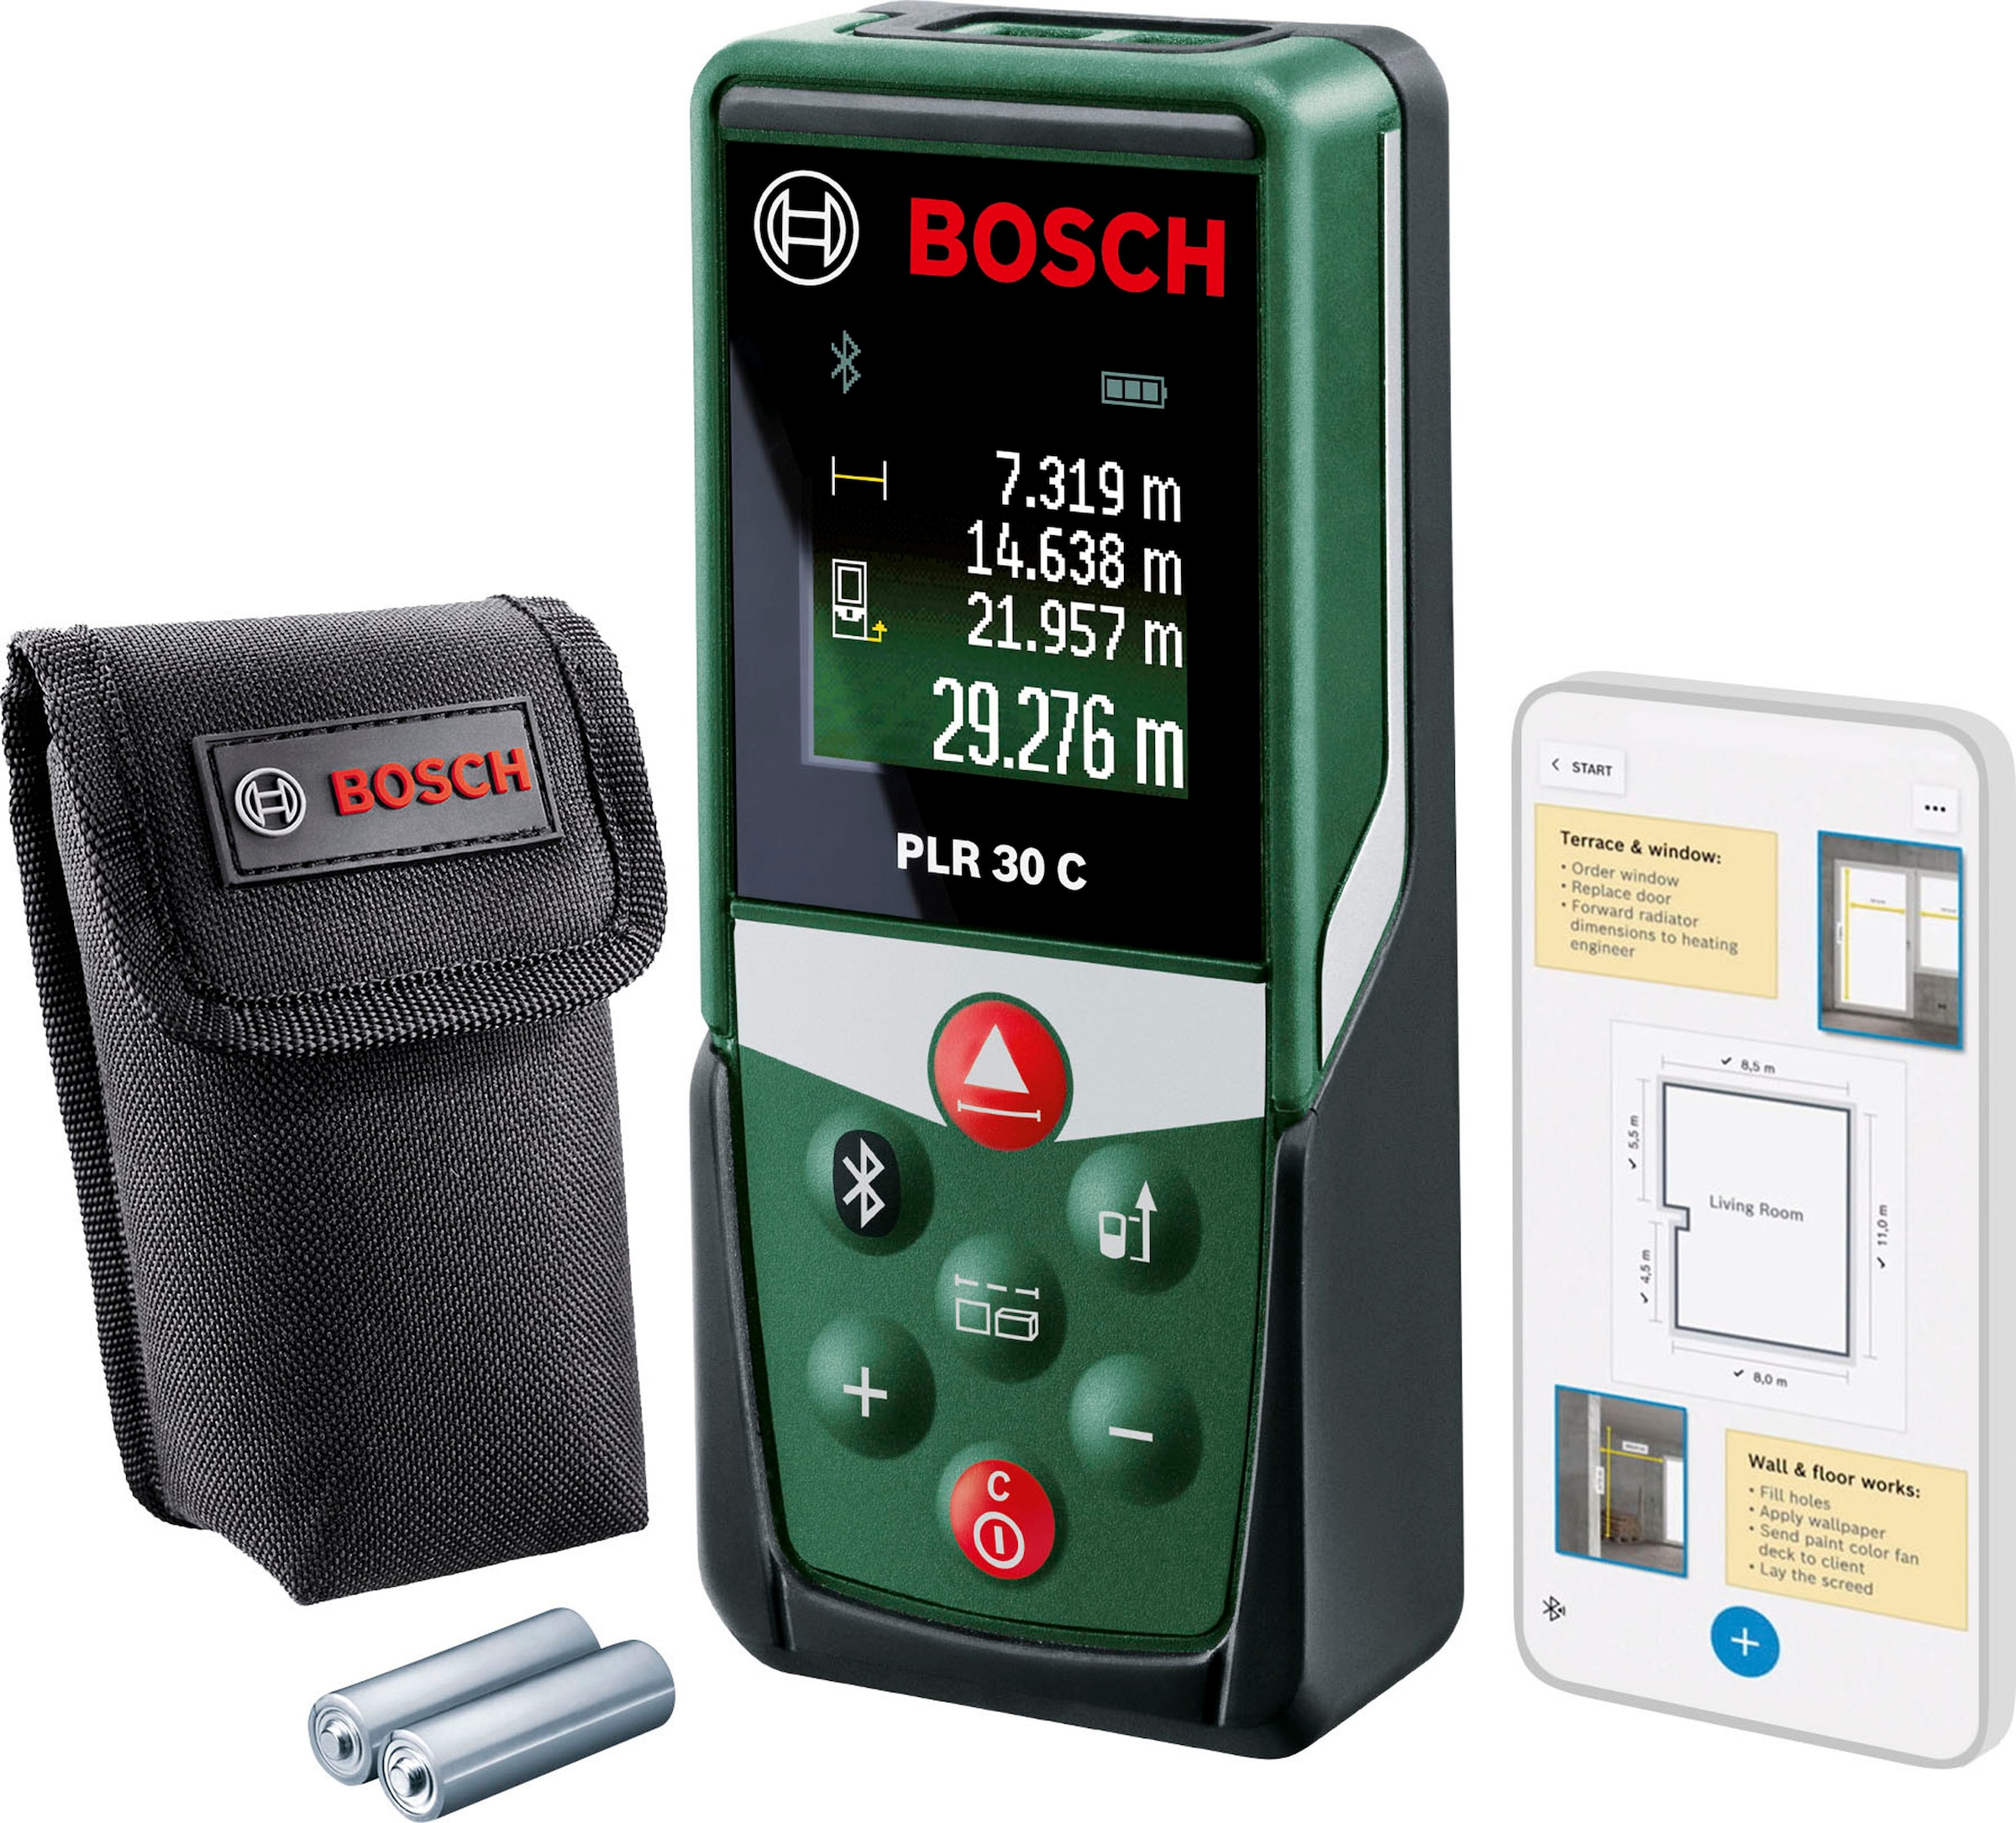 Bosch Home & Garden Entfernungsmesser "PLR 30 C"